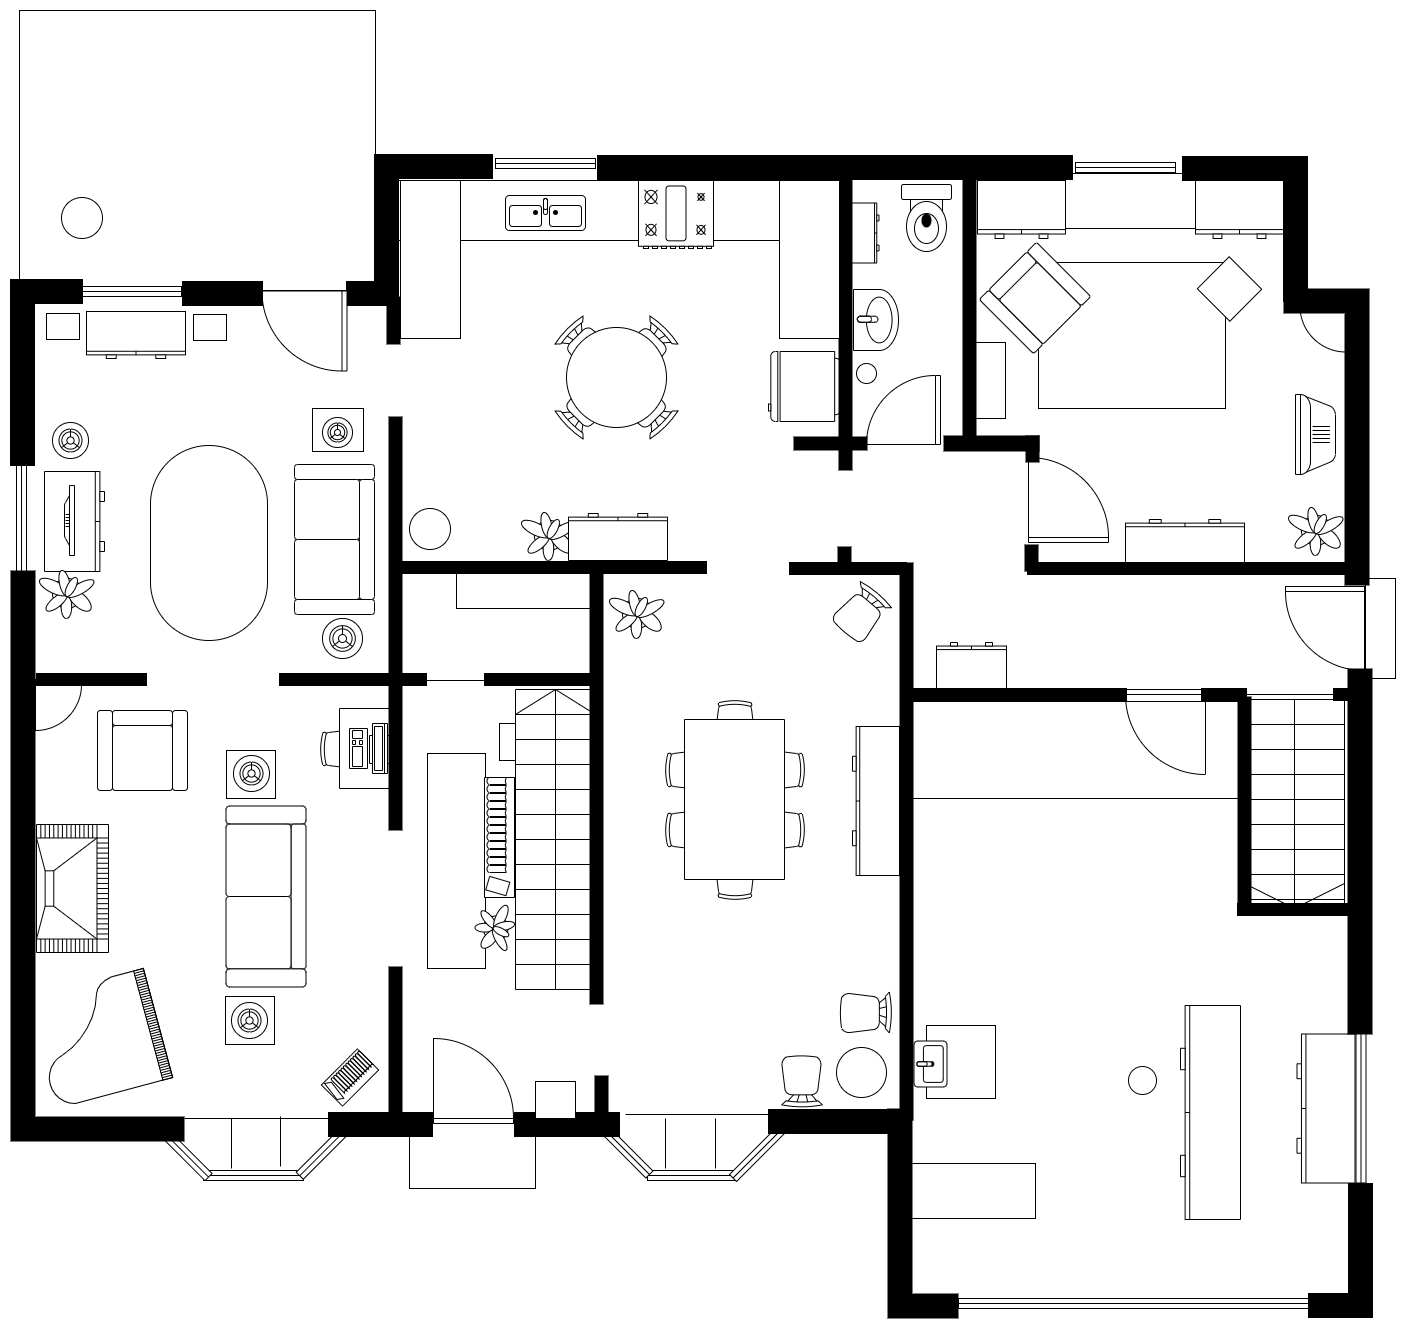 A floorplan created in draw.io